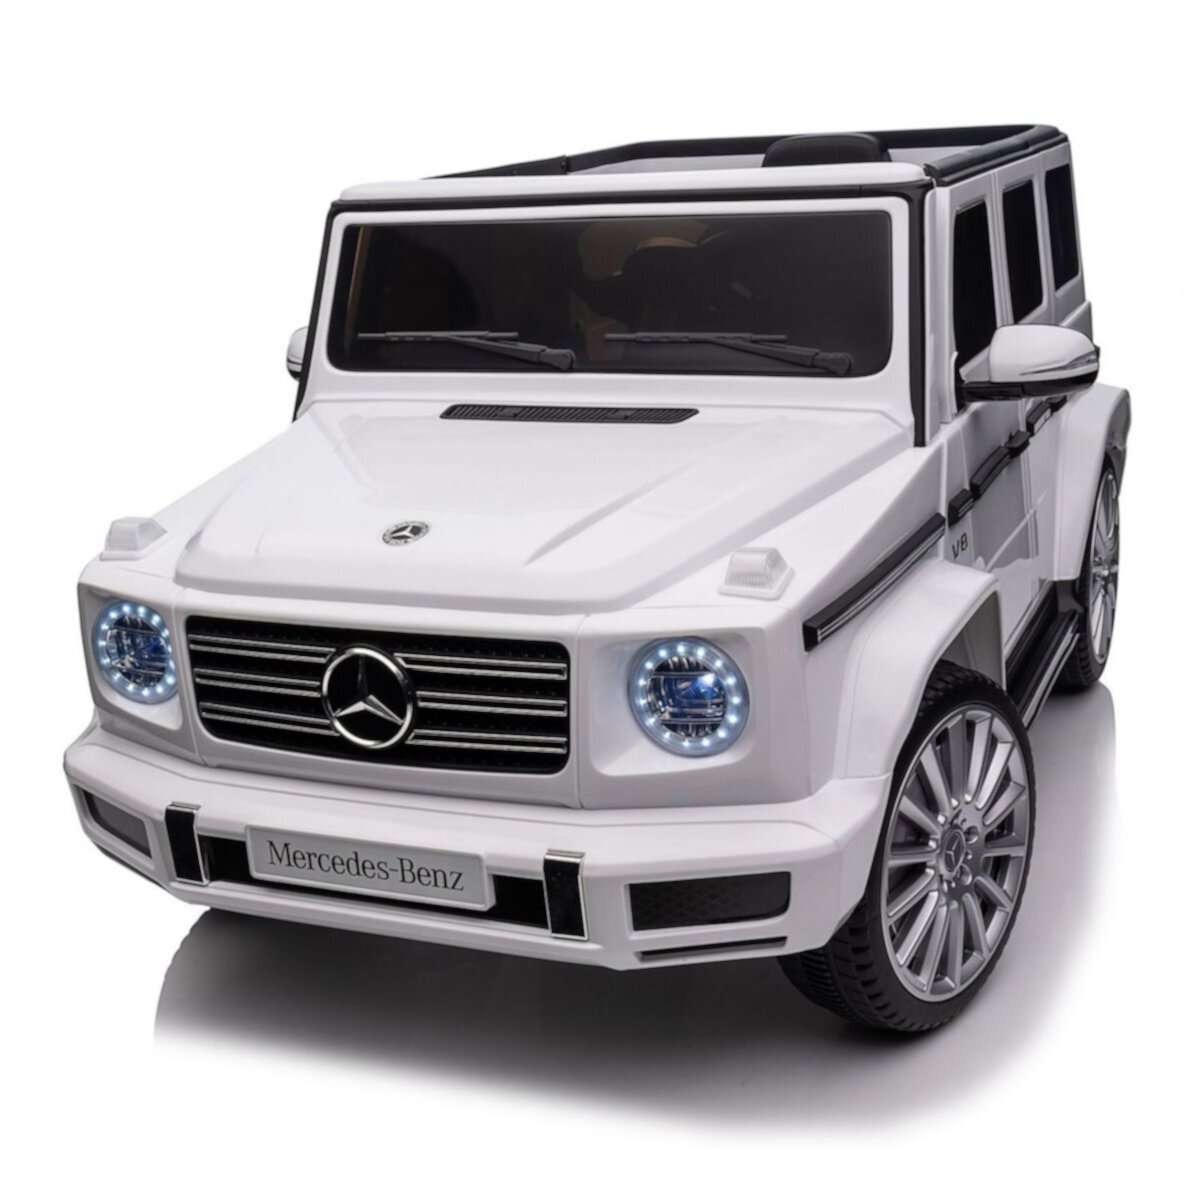 F.c Design Licensed Mercedes-benz G500 Kids Ride-on Toy - 24v Electric Car W/ Parent Remote Control F.C Design